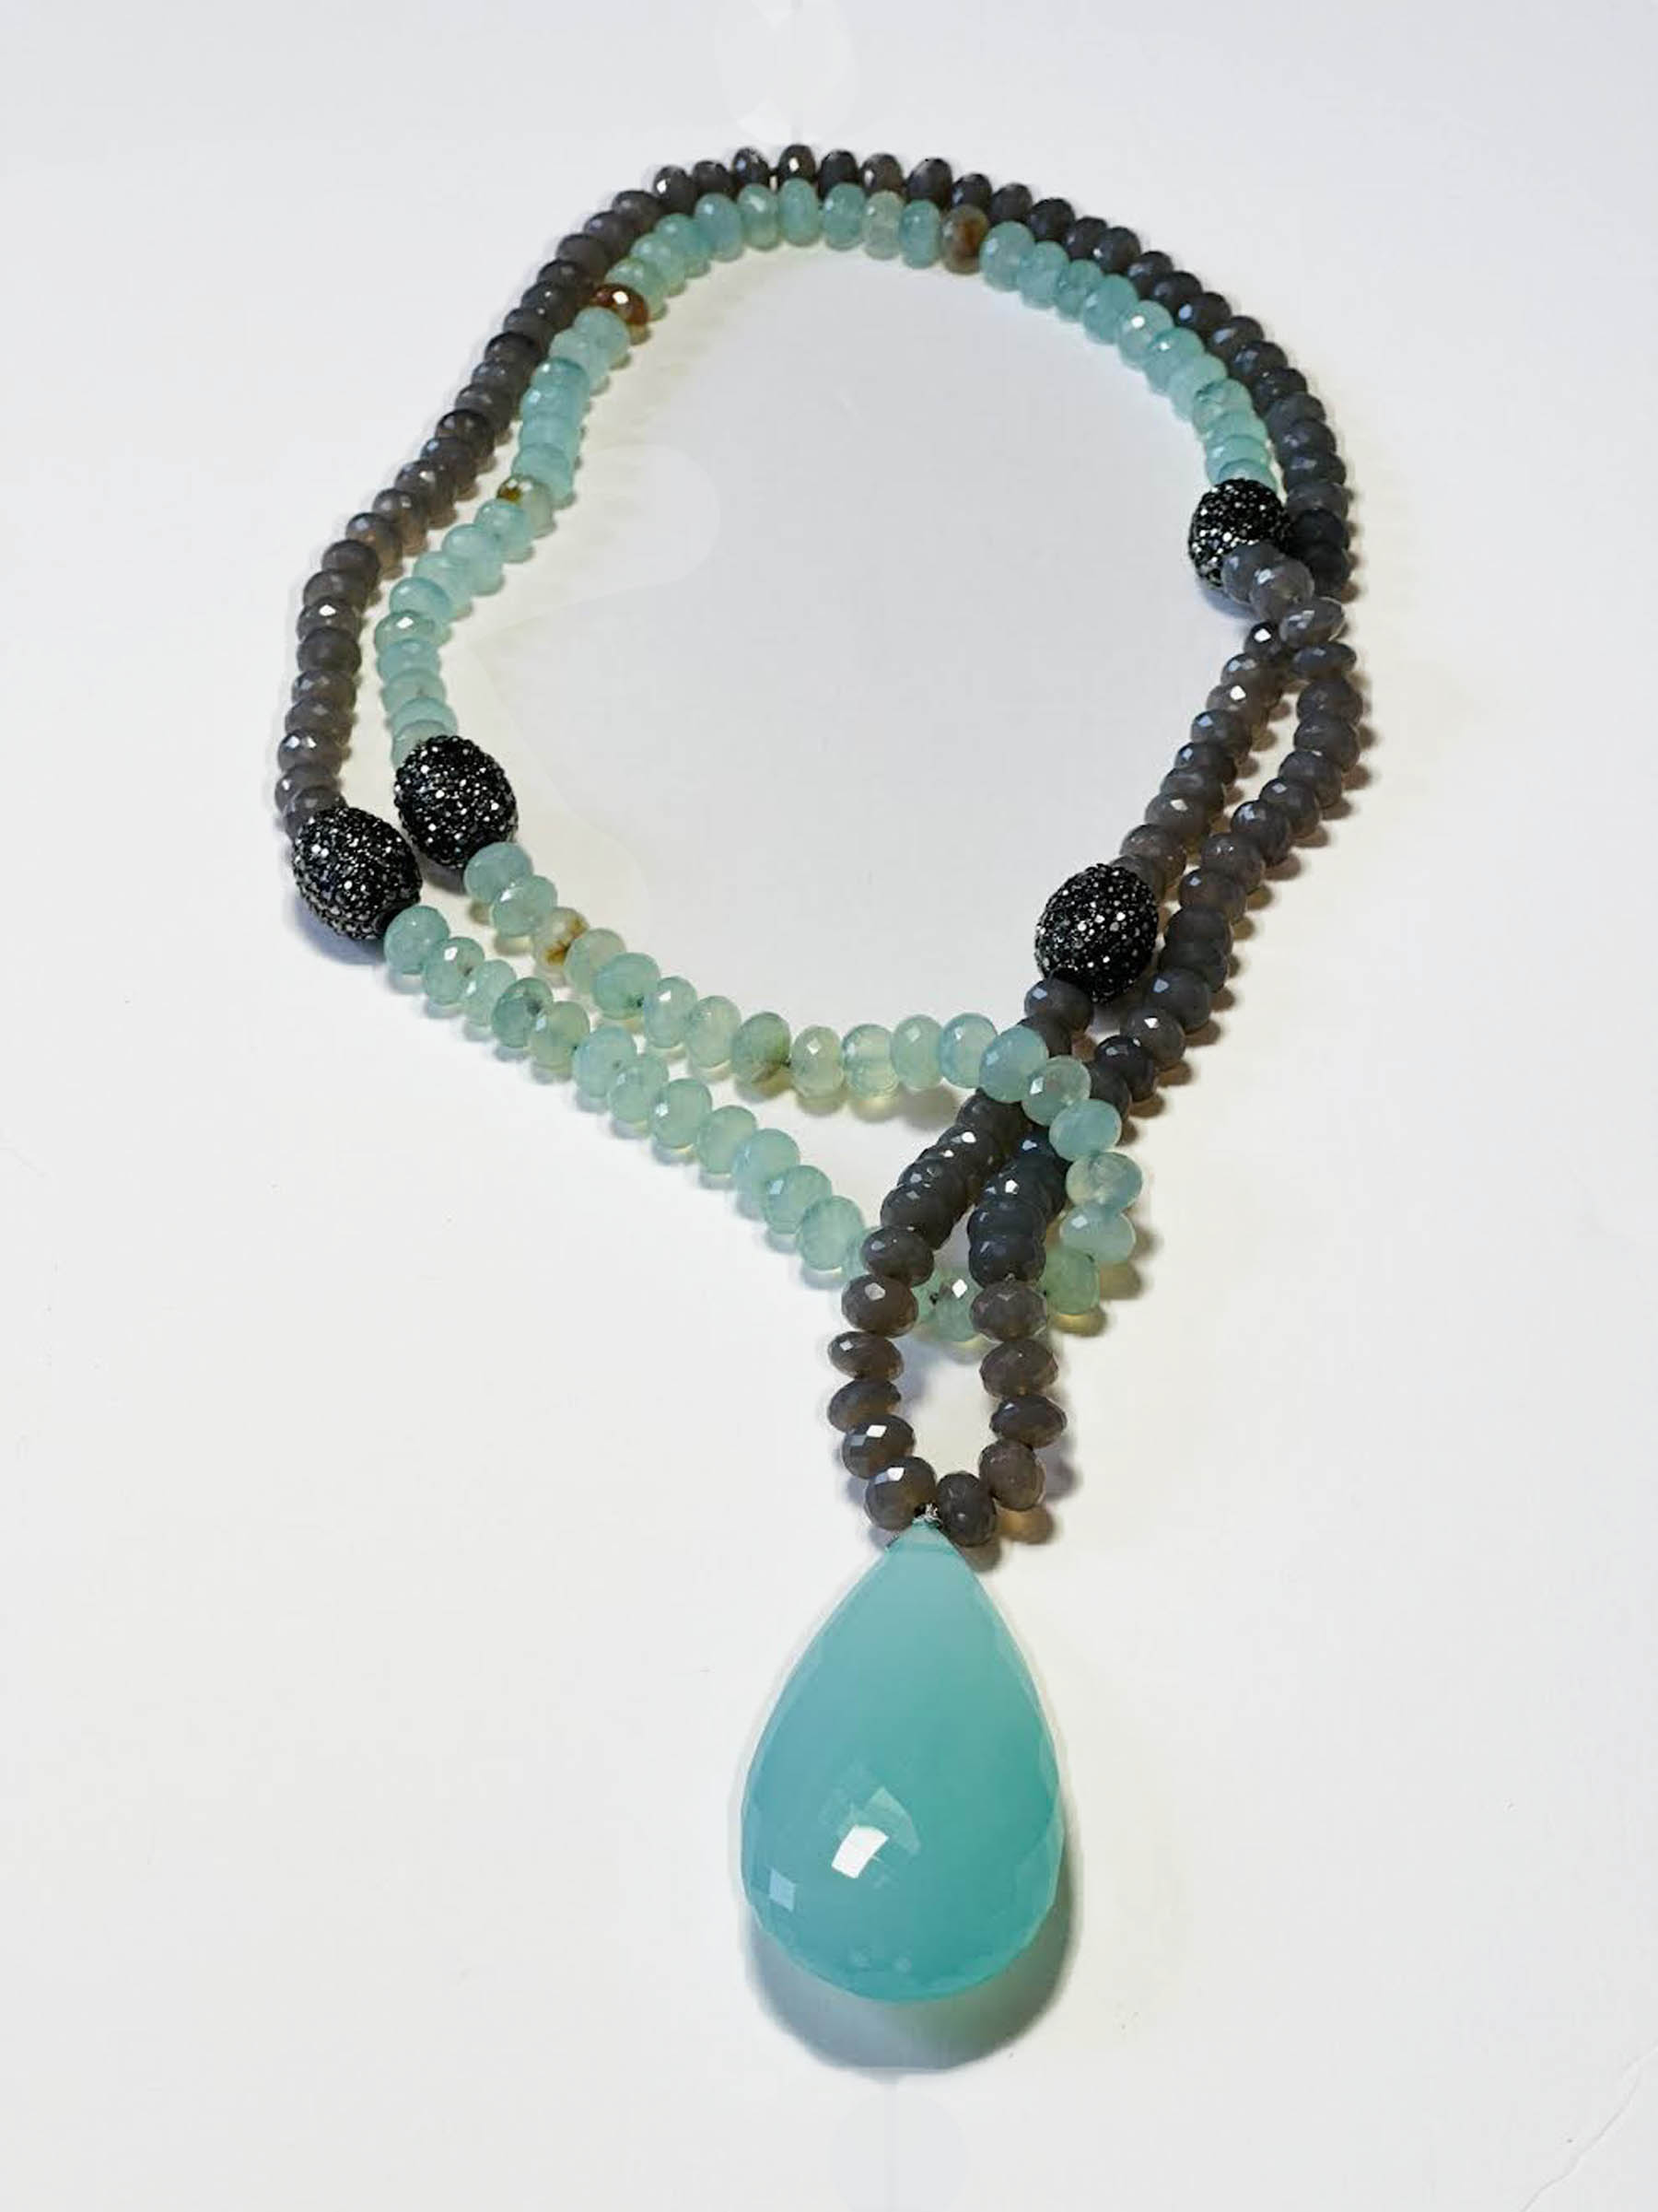 Peruvian Opal necklace